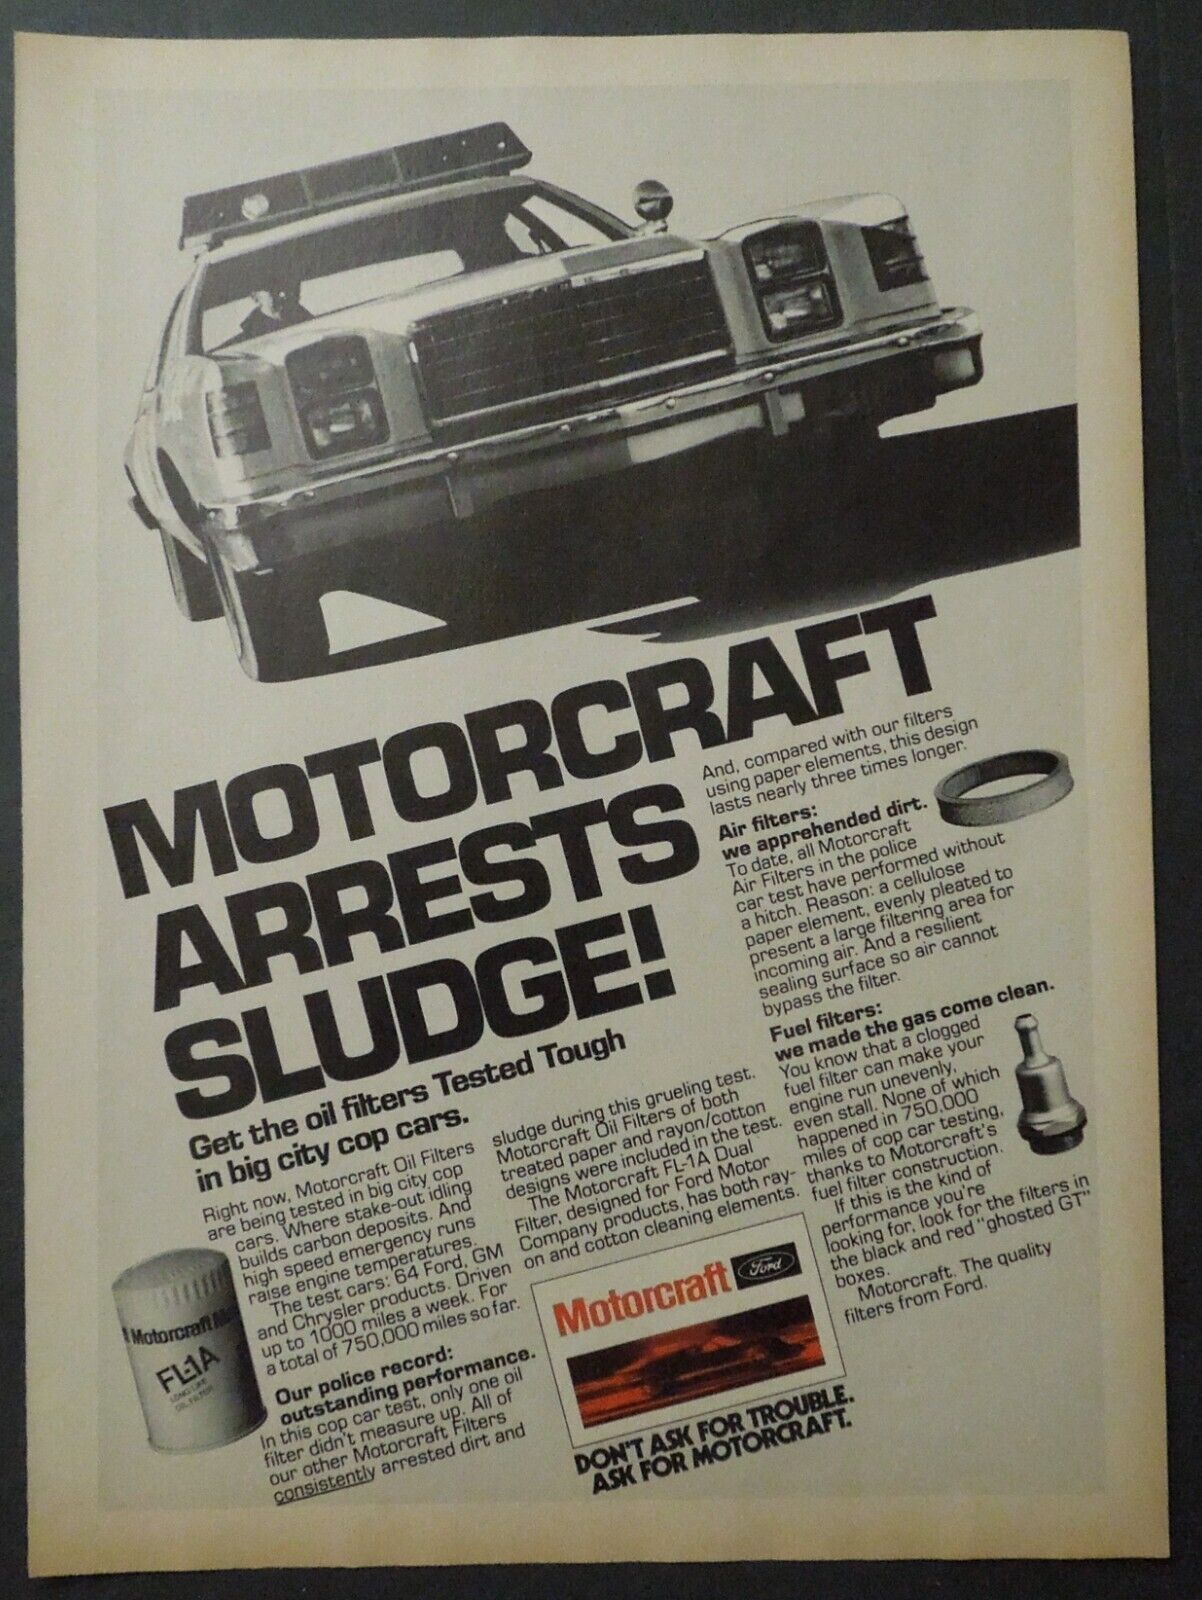 1979 MOTORCRAFT Oil, Air & Fuel Filters Magazine Ad - Motorcraft Arrests Sludge